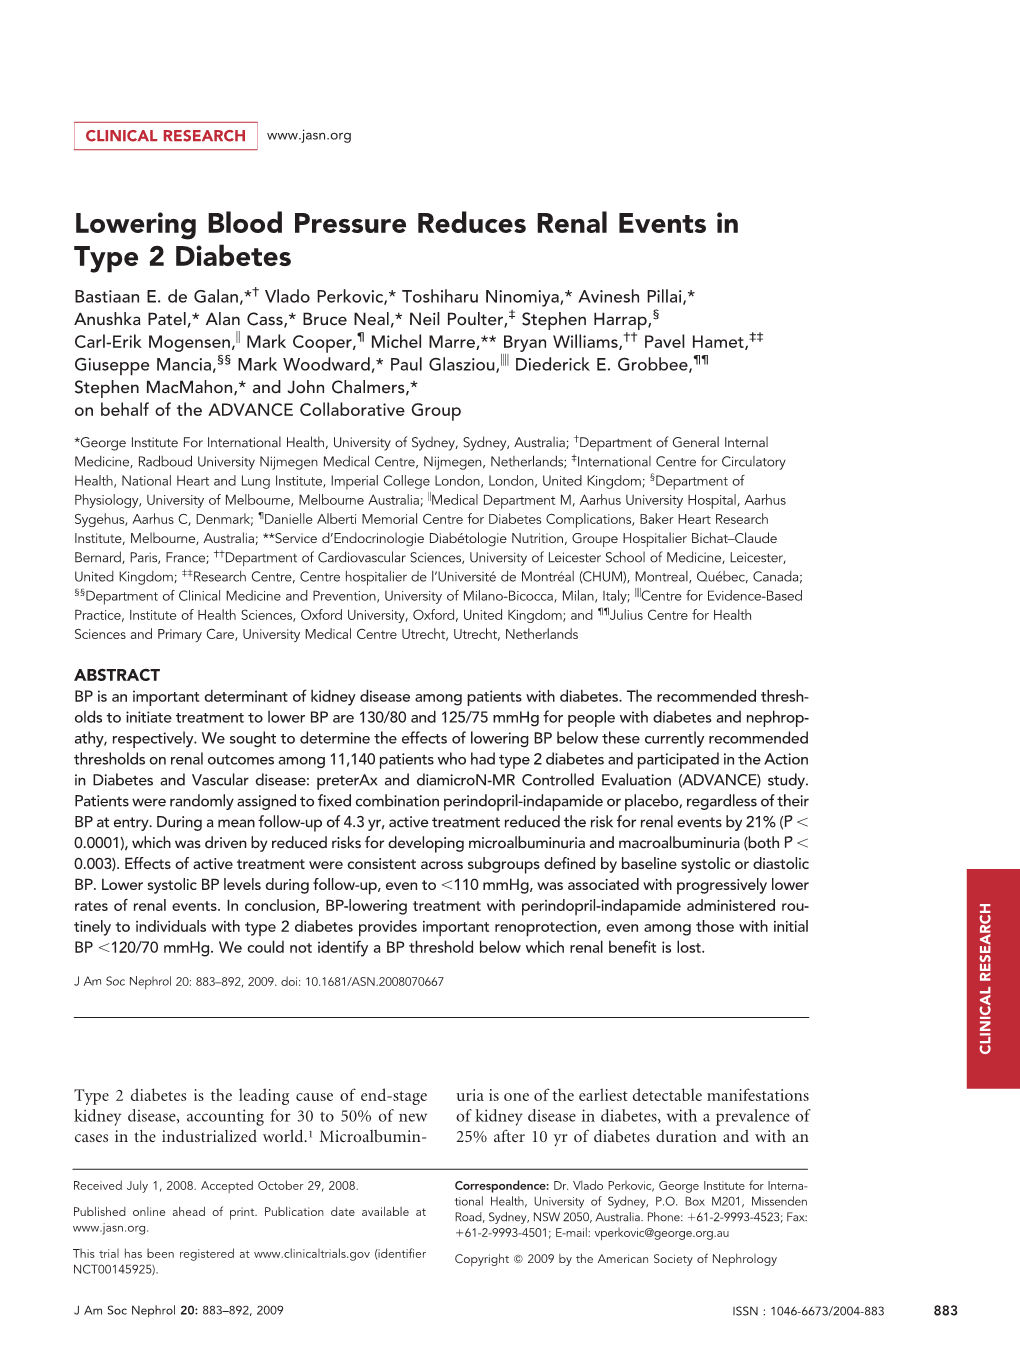 Lowering Blood Pressure Reduces Renal Events in Type 2 Diabetes